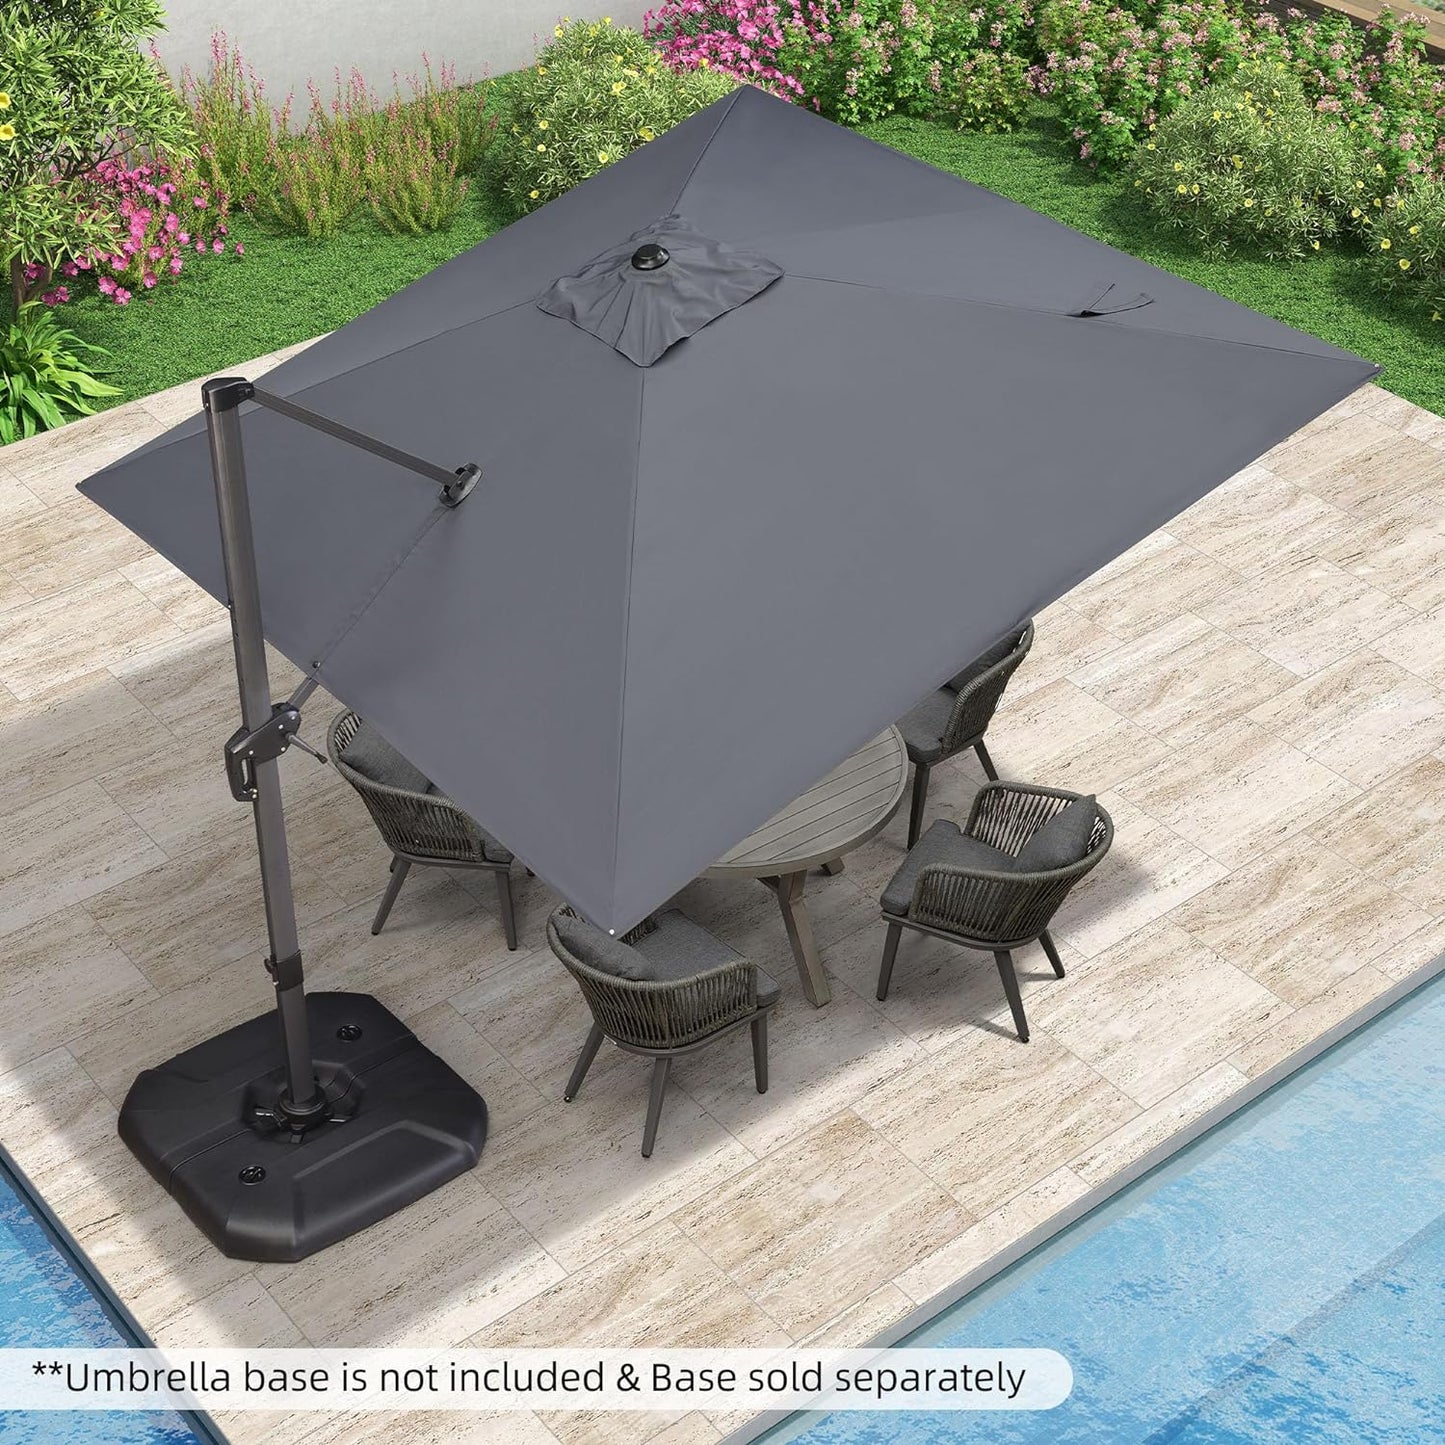 PURPLE LEAF 10x10 Ft Patio Umbrella Outdoor Cantilever Square Umbrella Aluminum Offset Umbrella with 360-degree Rotation for Garden Deck Pool Patio, Grey